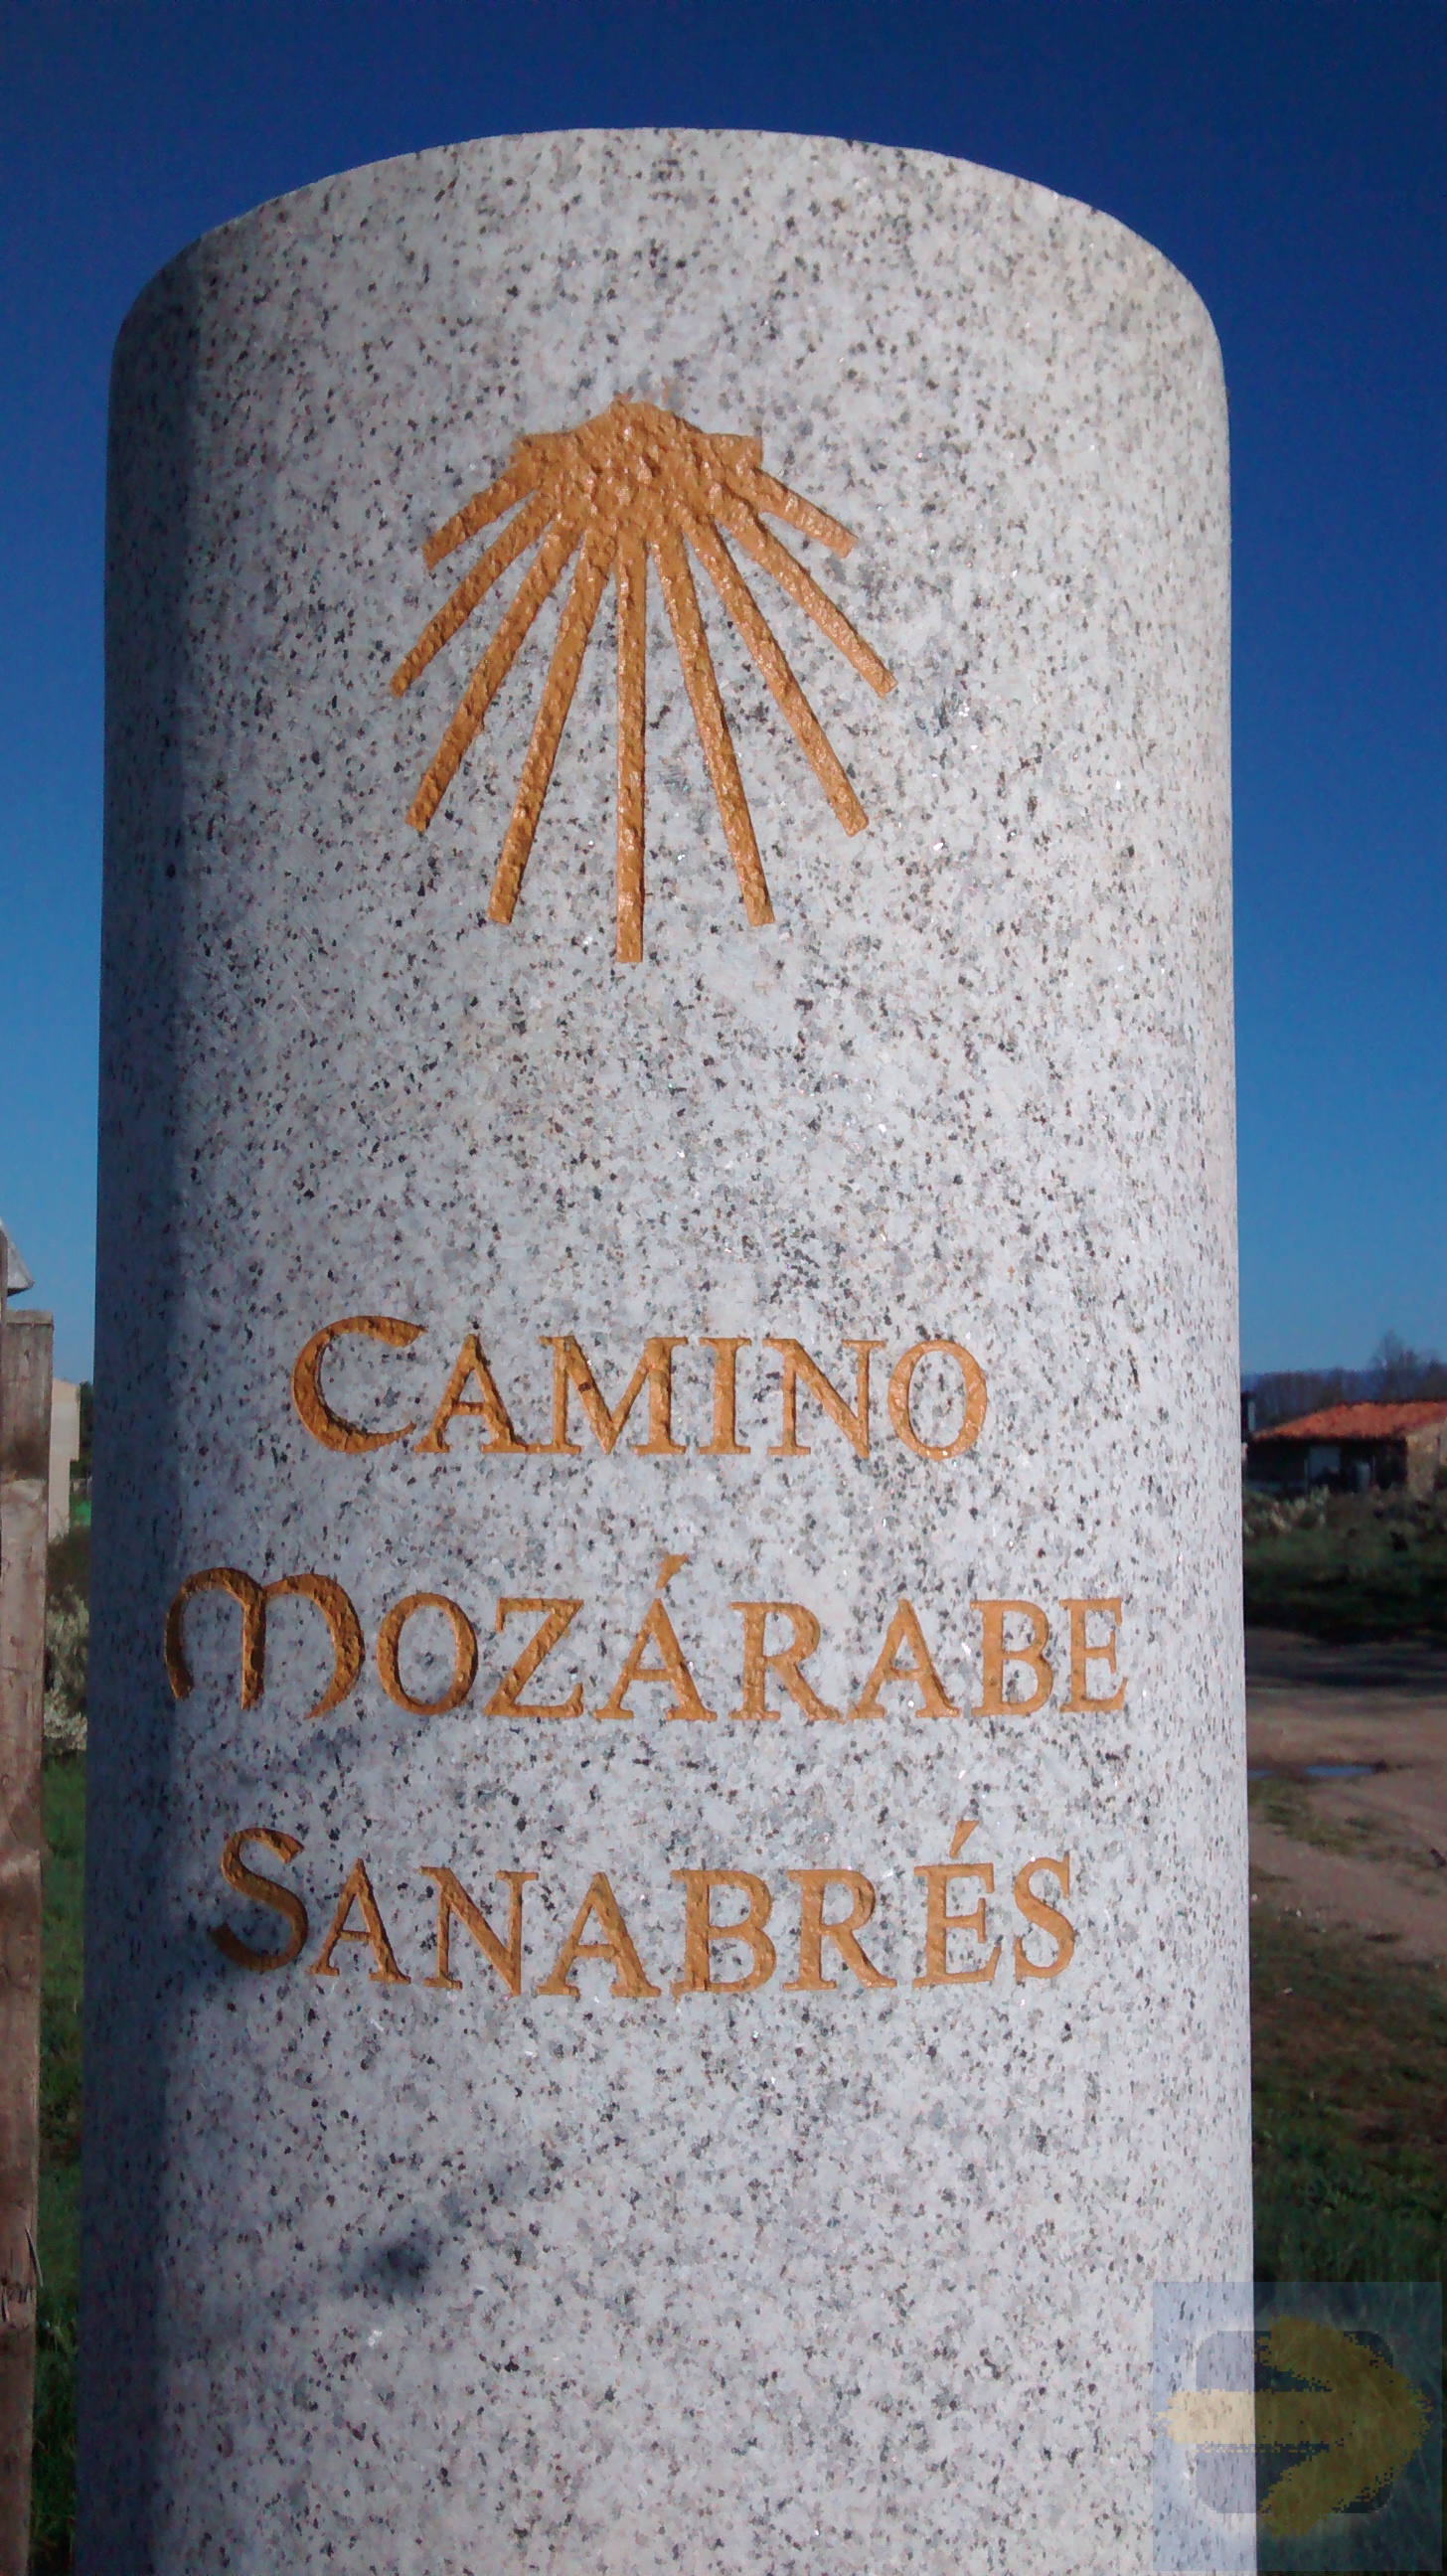 Mozarabe Sanabres